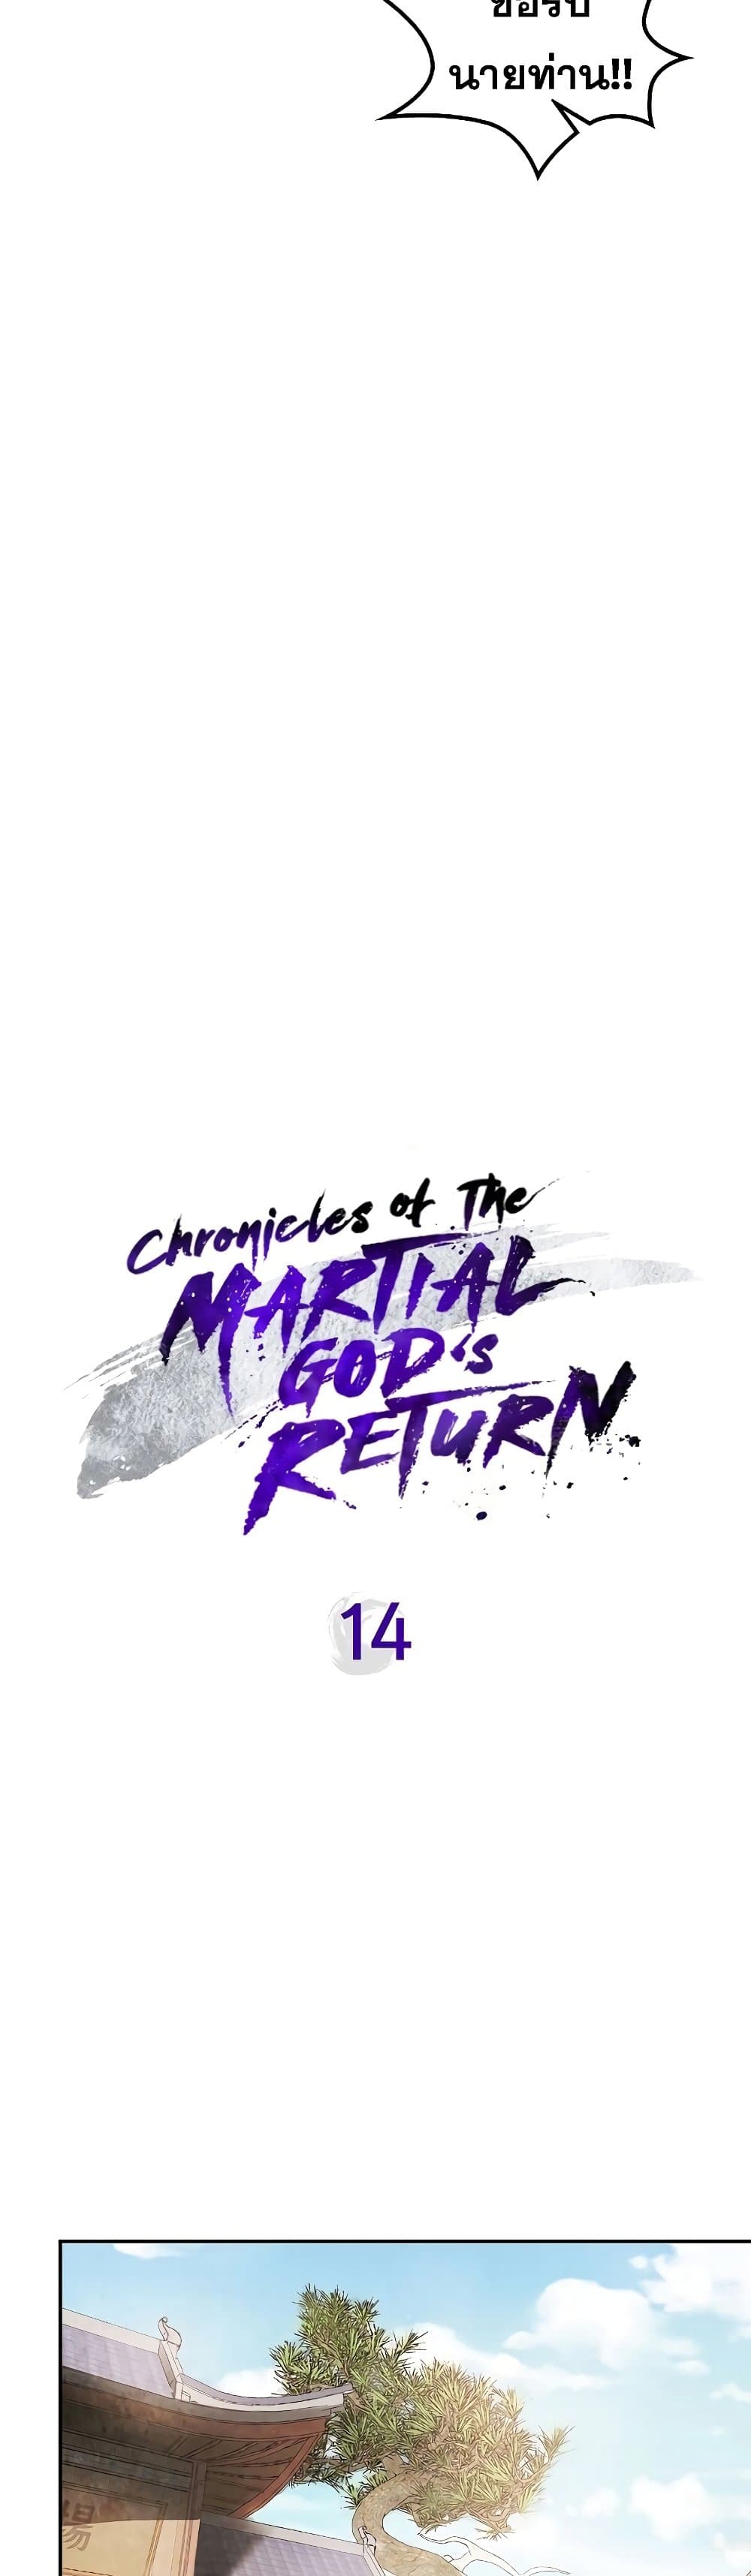 Chronicles Of The Martial God’s Return 14 10